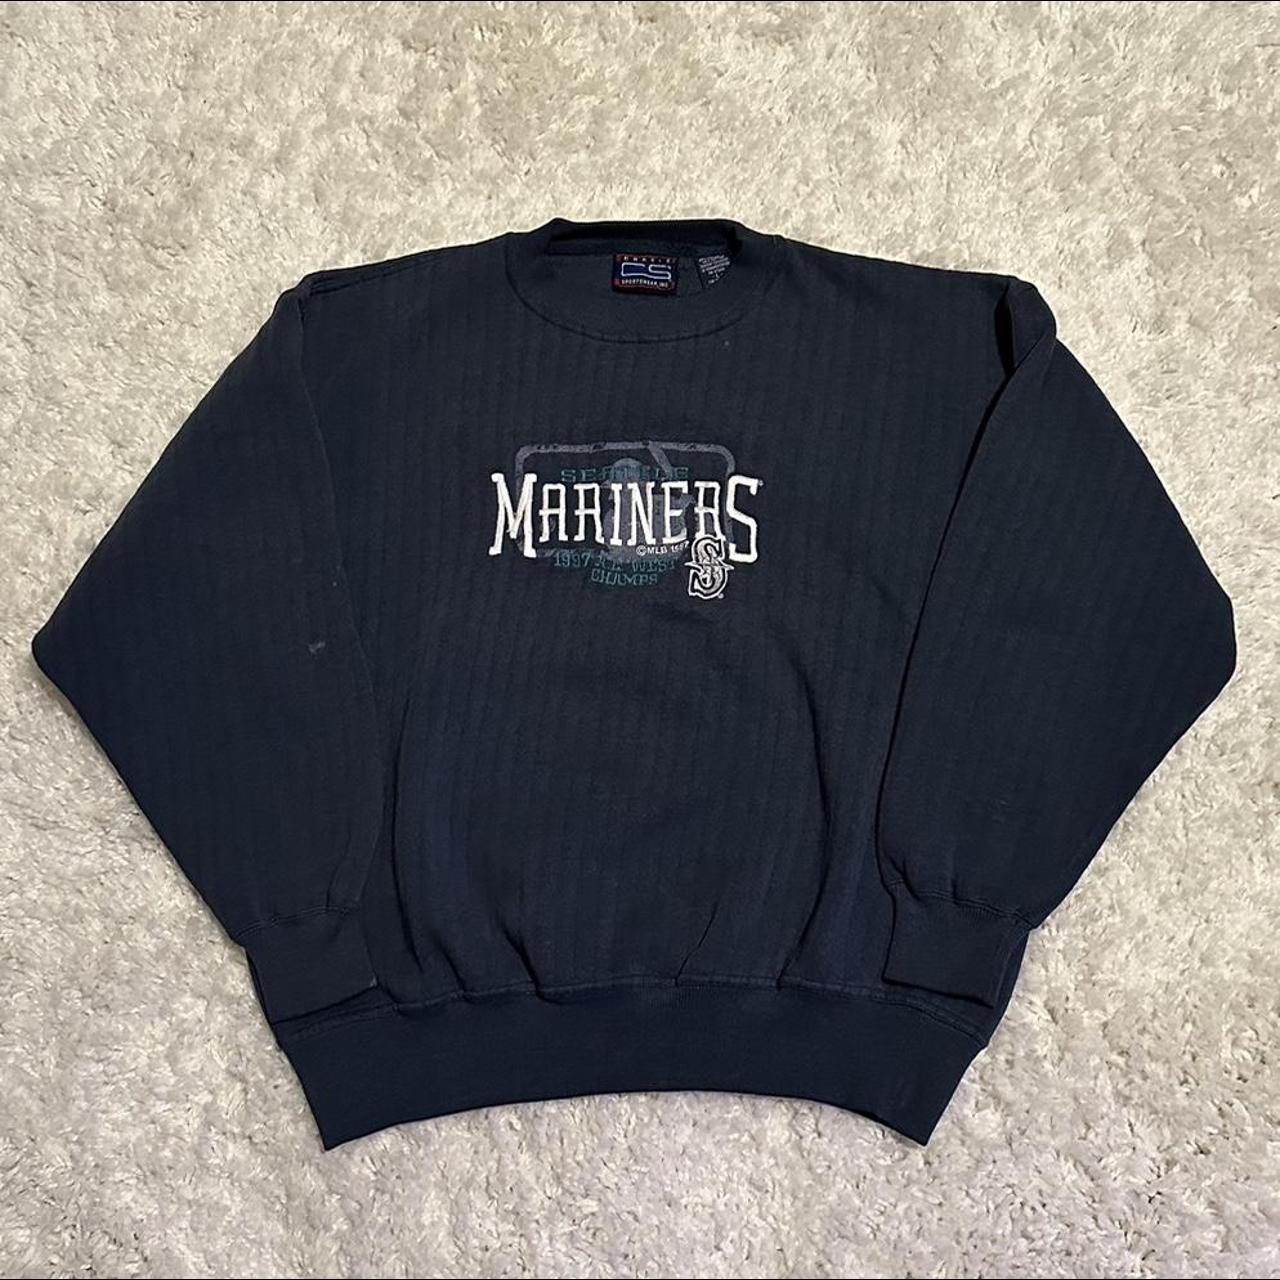 Vintage Seattle Mariners Grey Crew Neck Sweatshirt